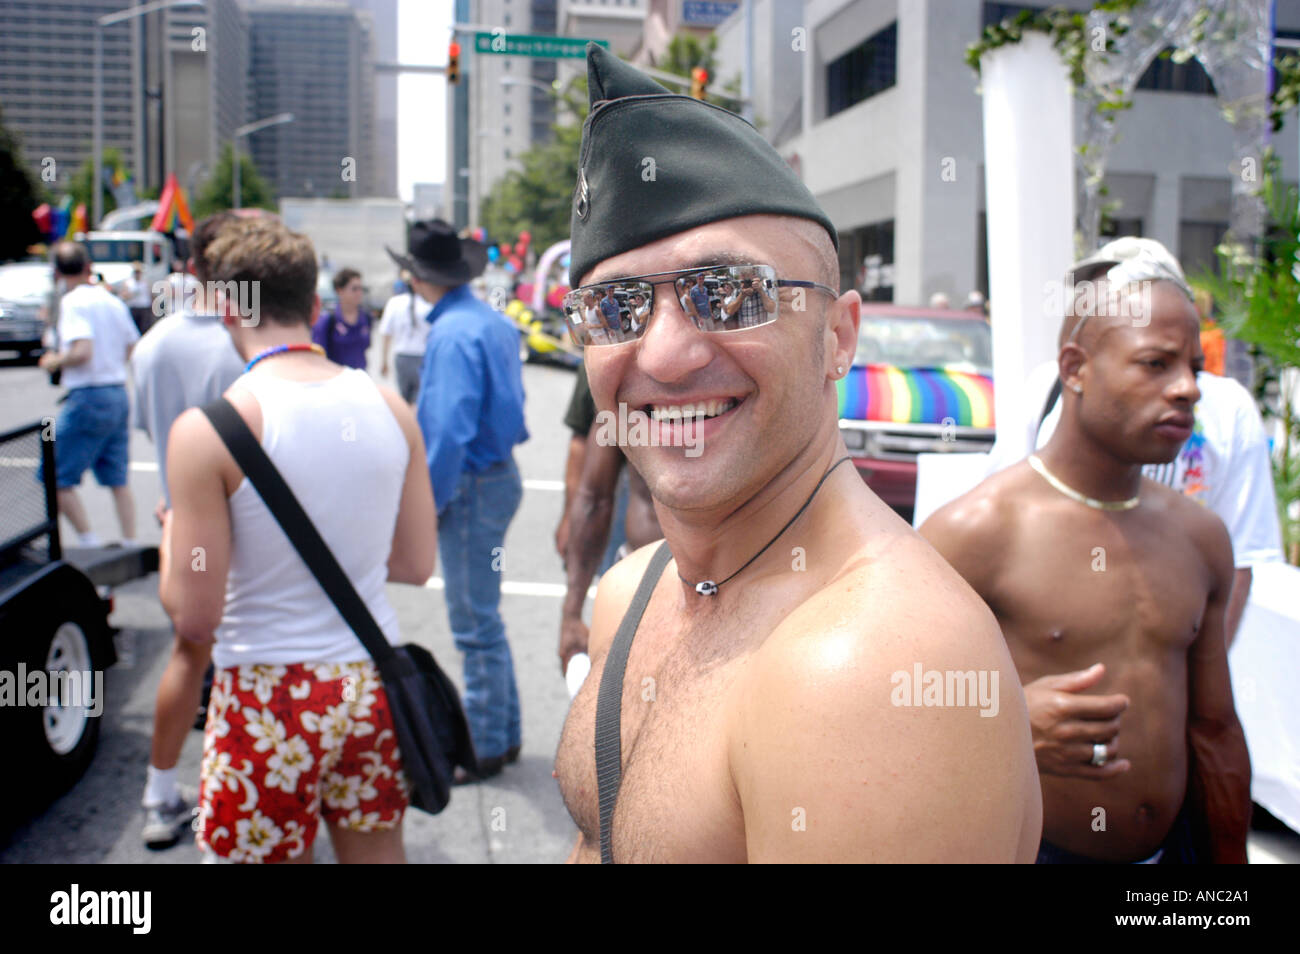 Man Atlanta Gay Pride Parade Stockfotos und -bilder Kaufen - Alamy